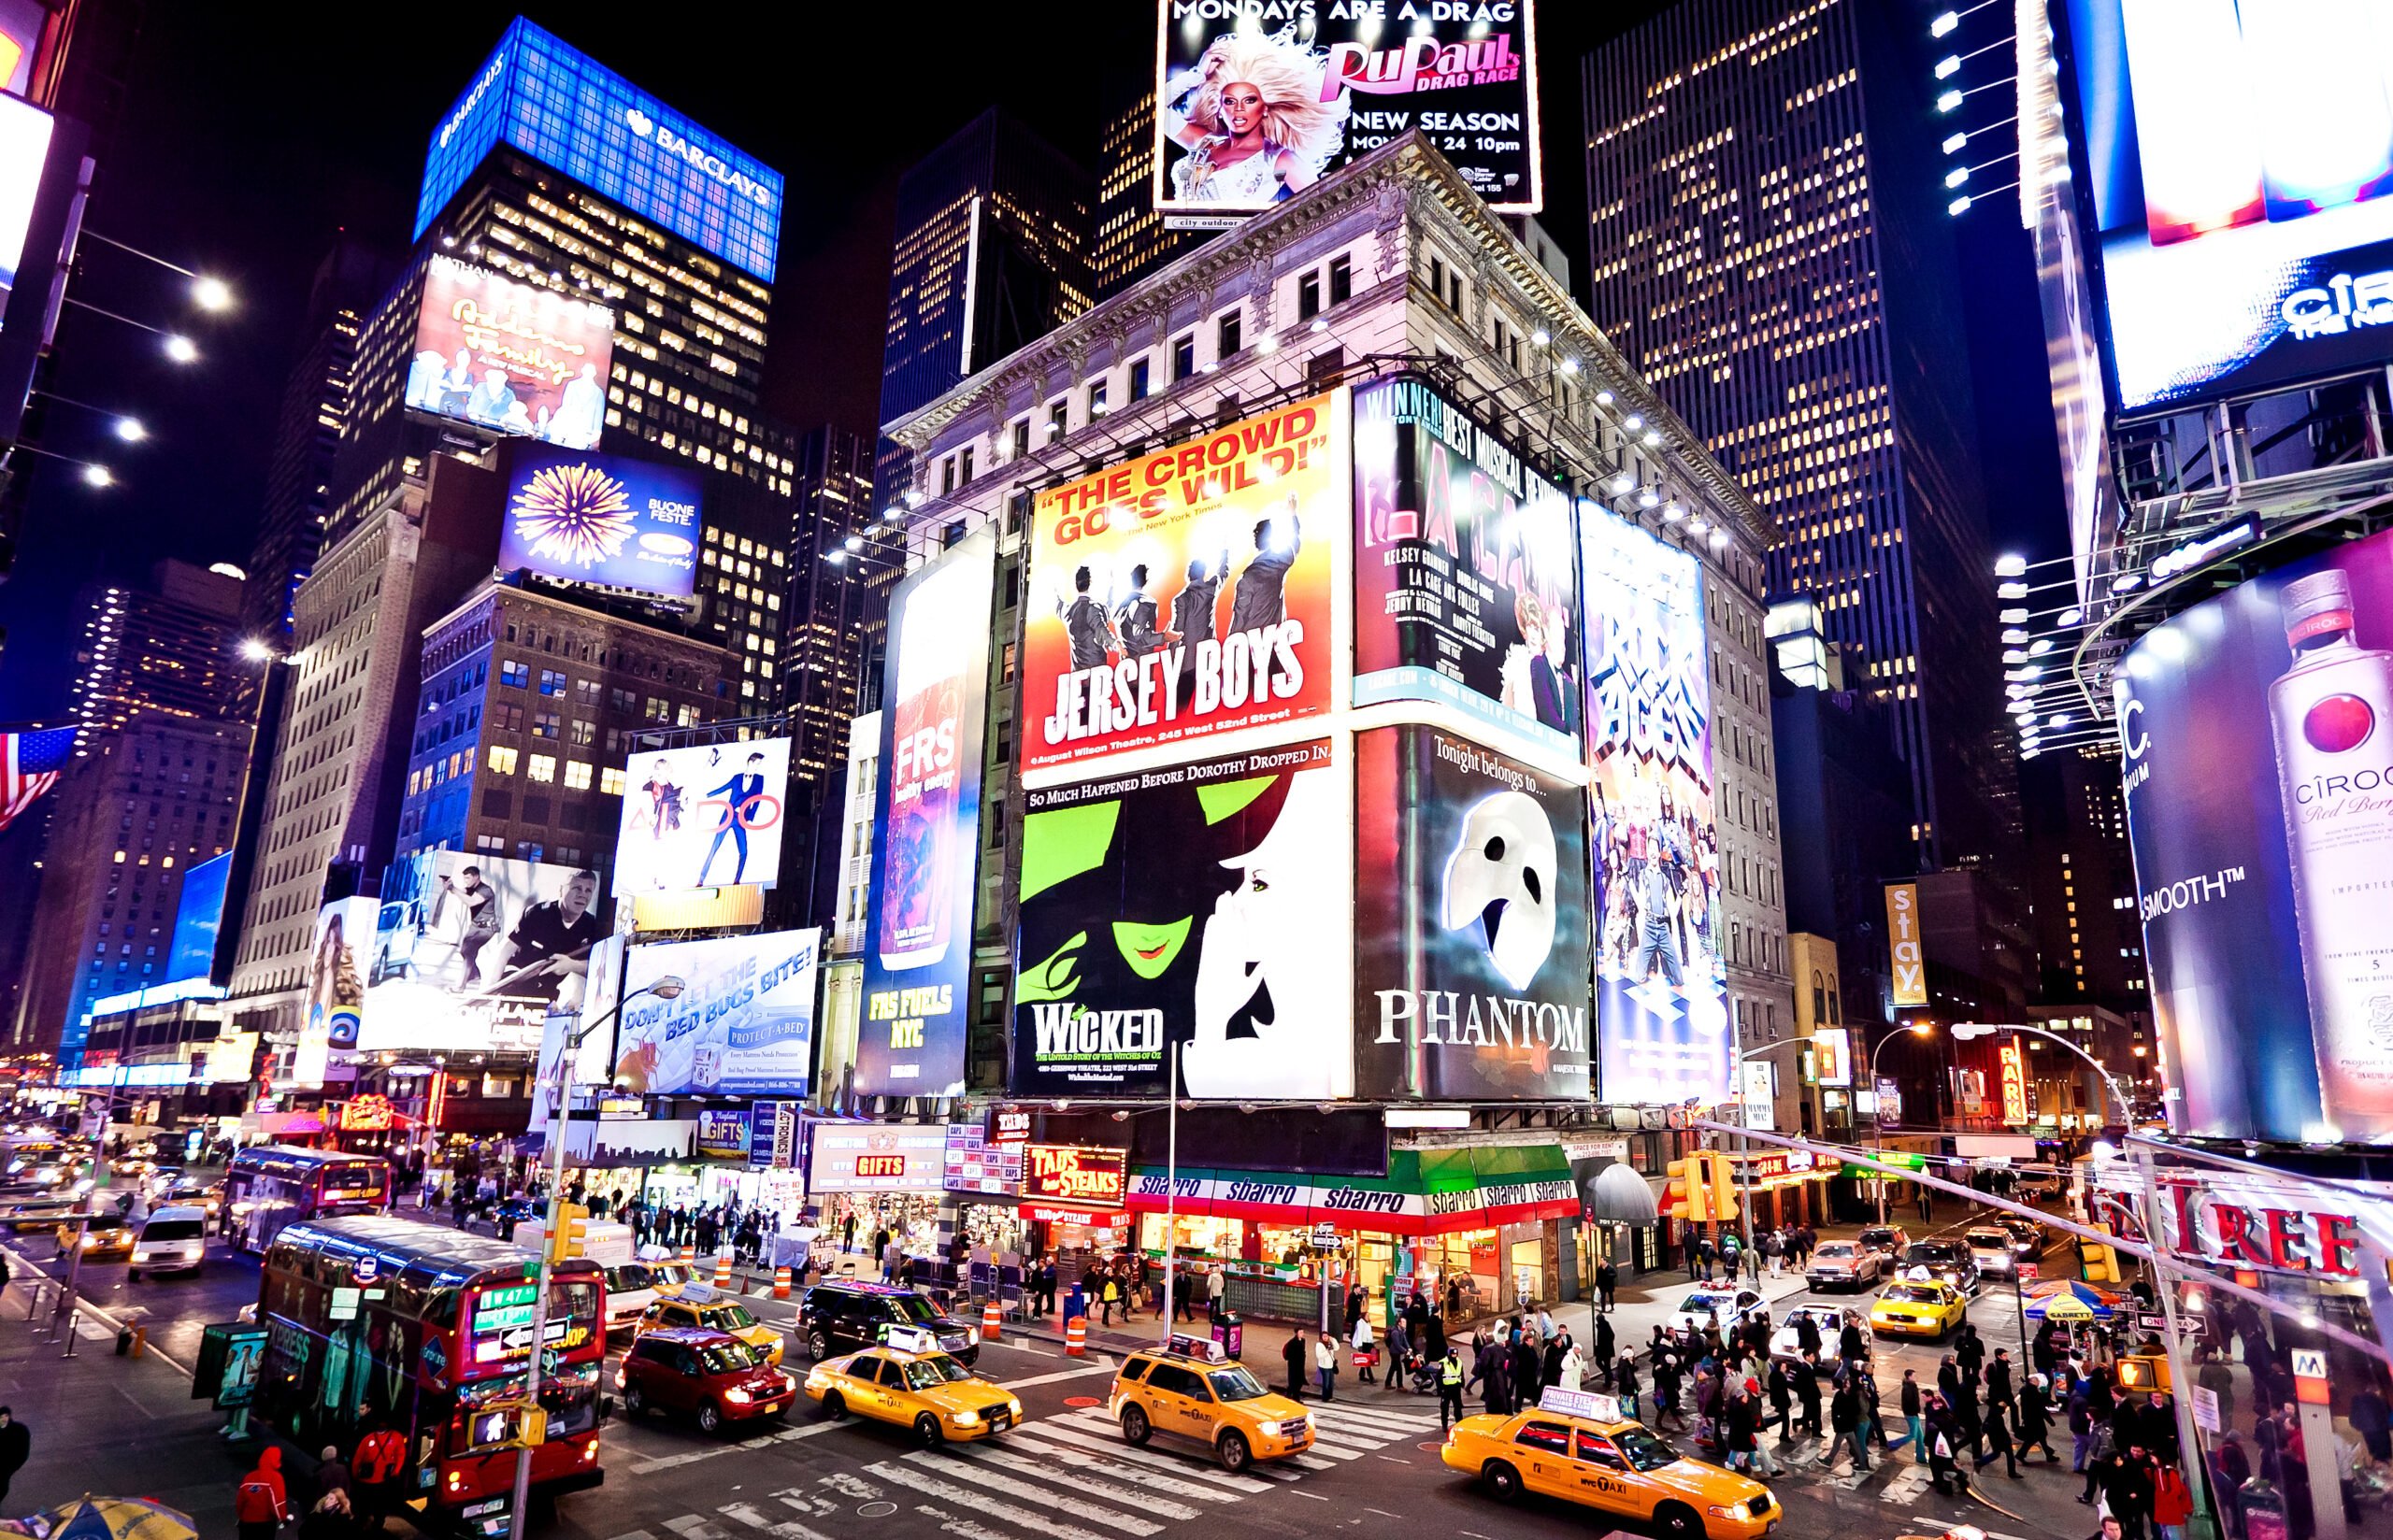 New York Broadway shows 